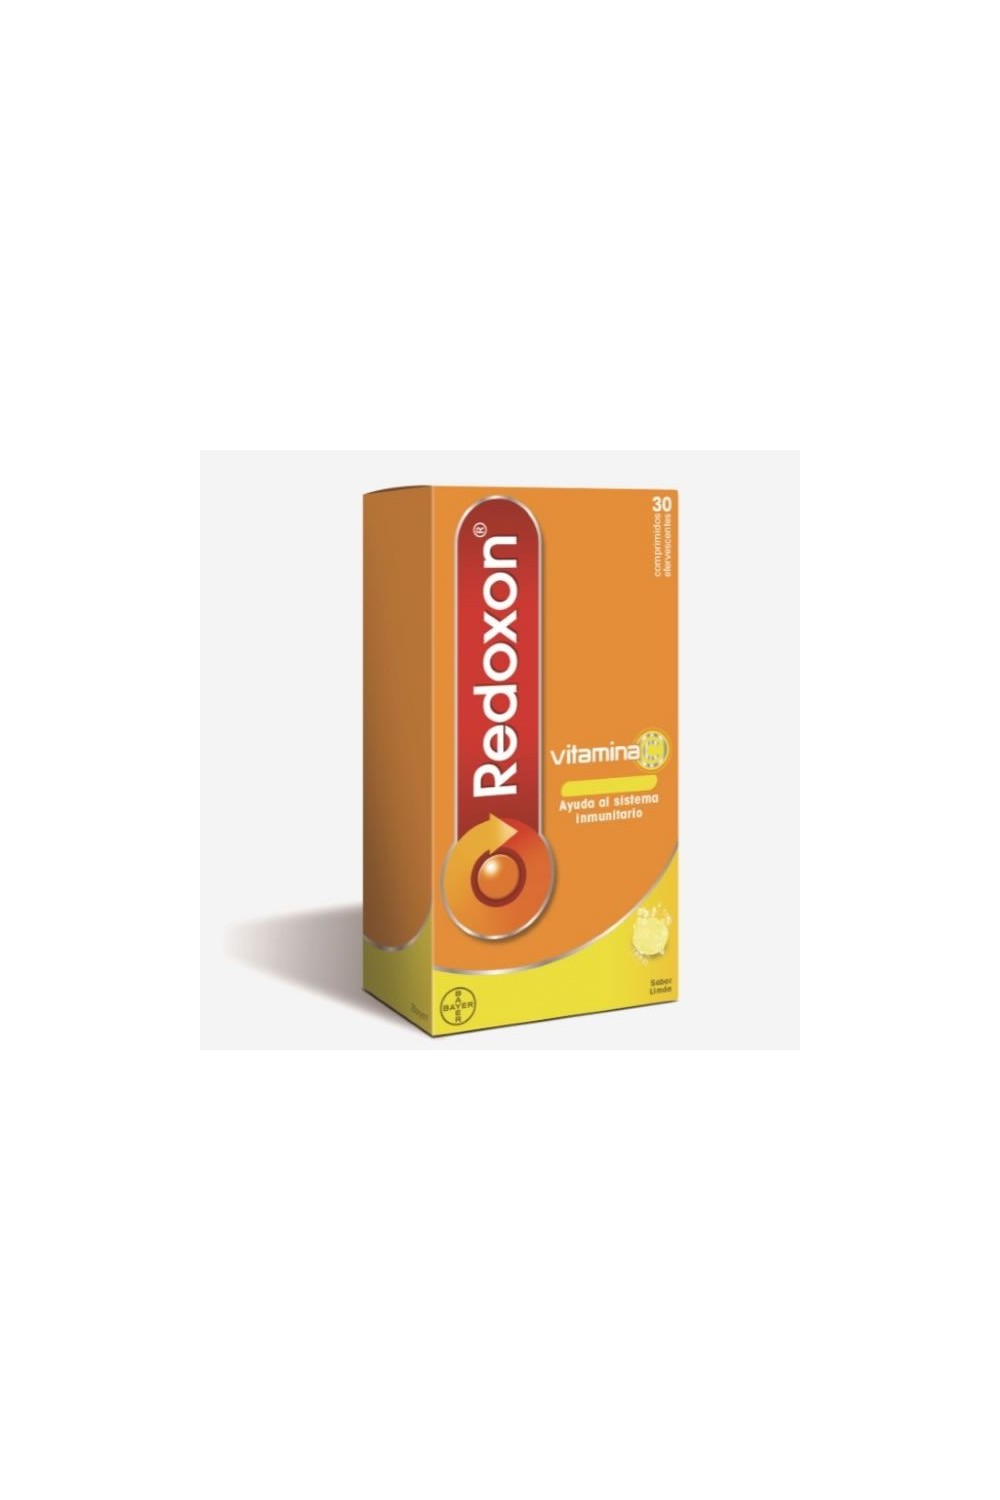 Redoxon Vitamina C 30 Tablets Effervescent Lemon